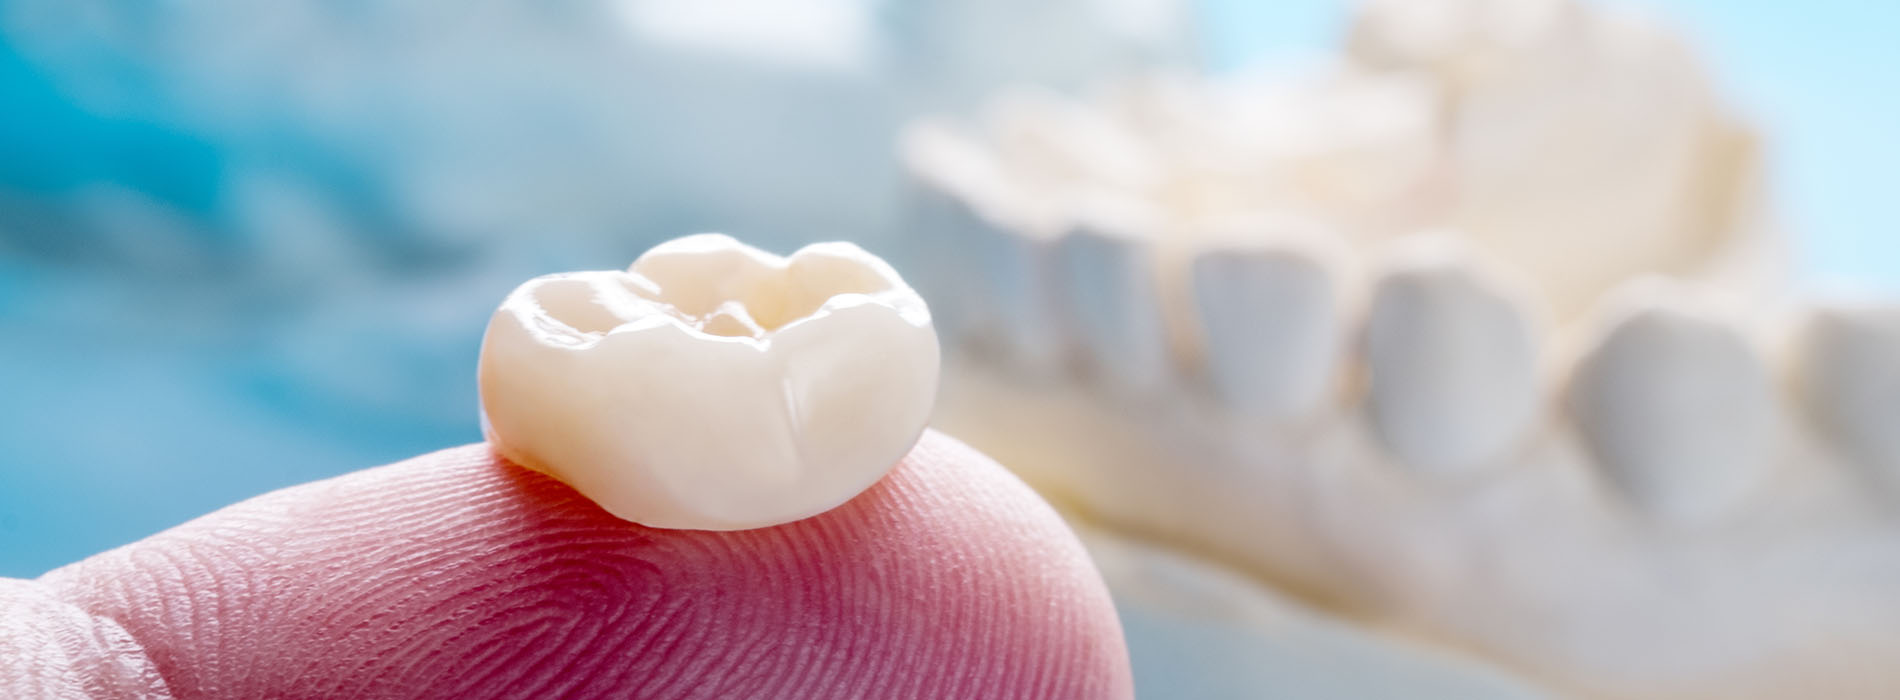 TruBlu Dentistry | Digital Radiography, All-on-4 reg  and Periodontal Treatment